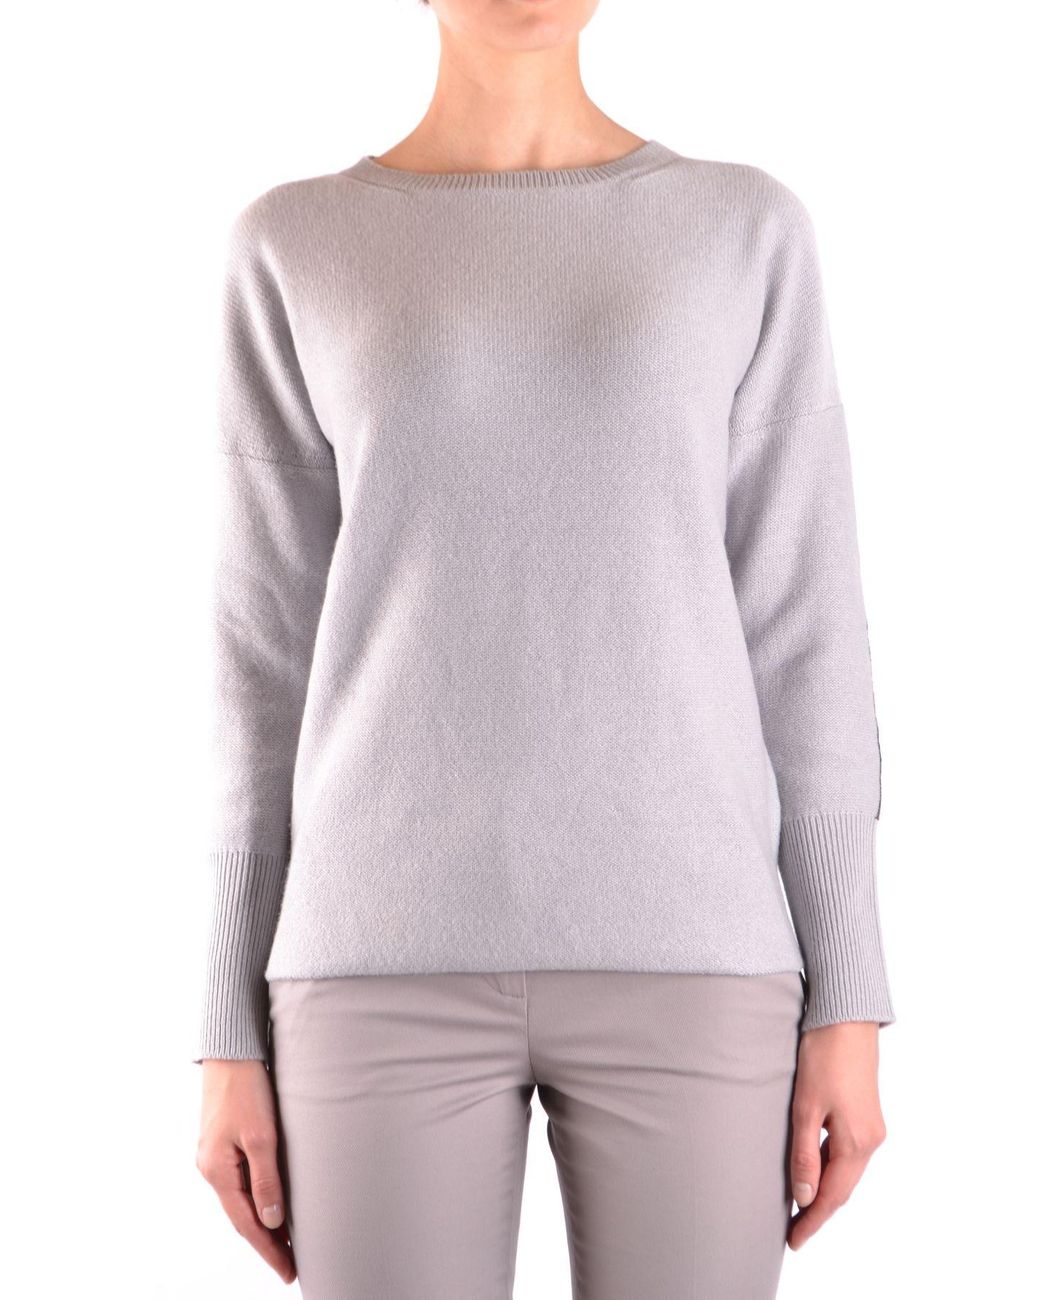 Fabiana Filippi Cashmere Grey Wool Sweater in Gray - Save 25% - Lyst